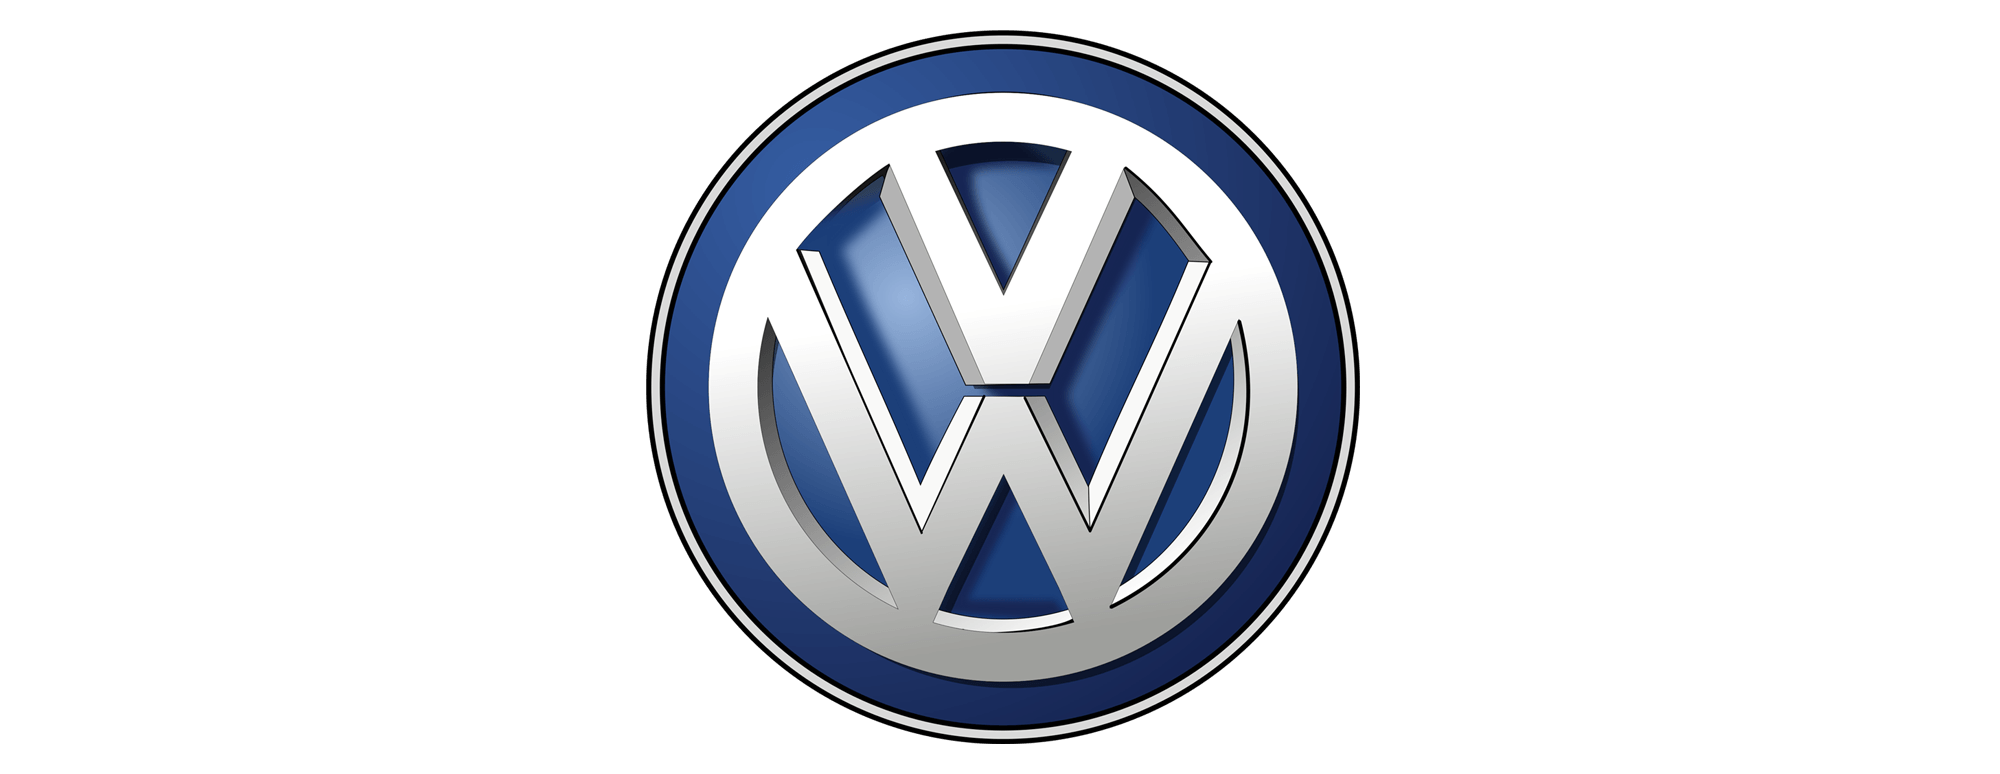 Original Volkswagen Logo - Volkswagen Logo Meaning and History, latest models. World Cars Brands